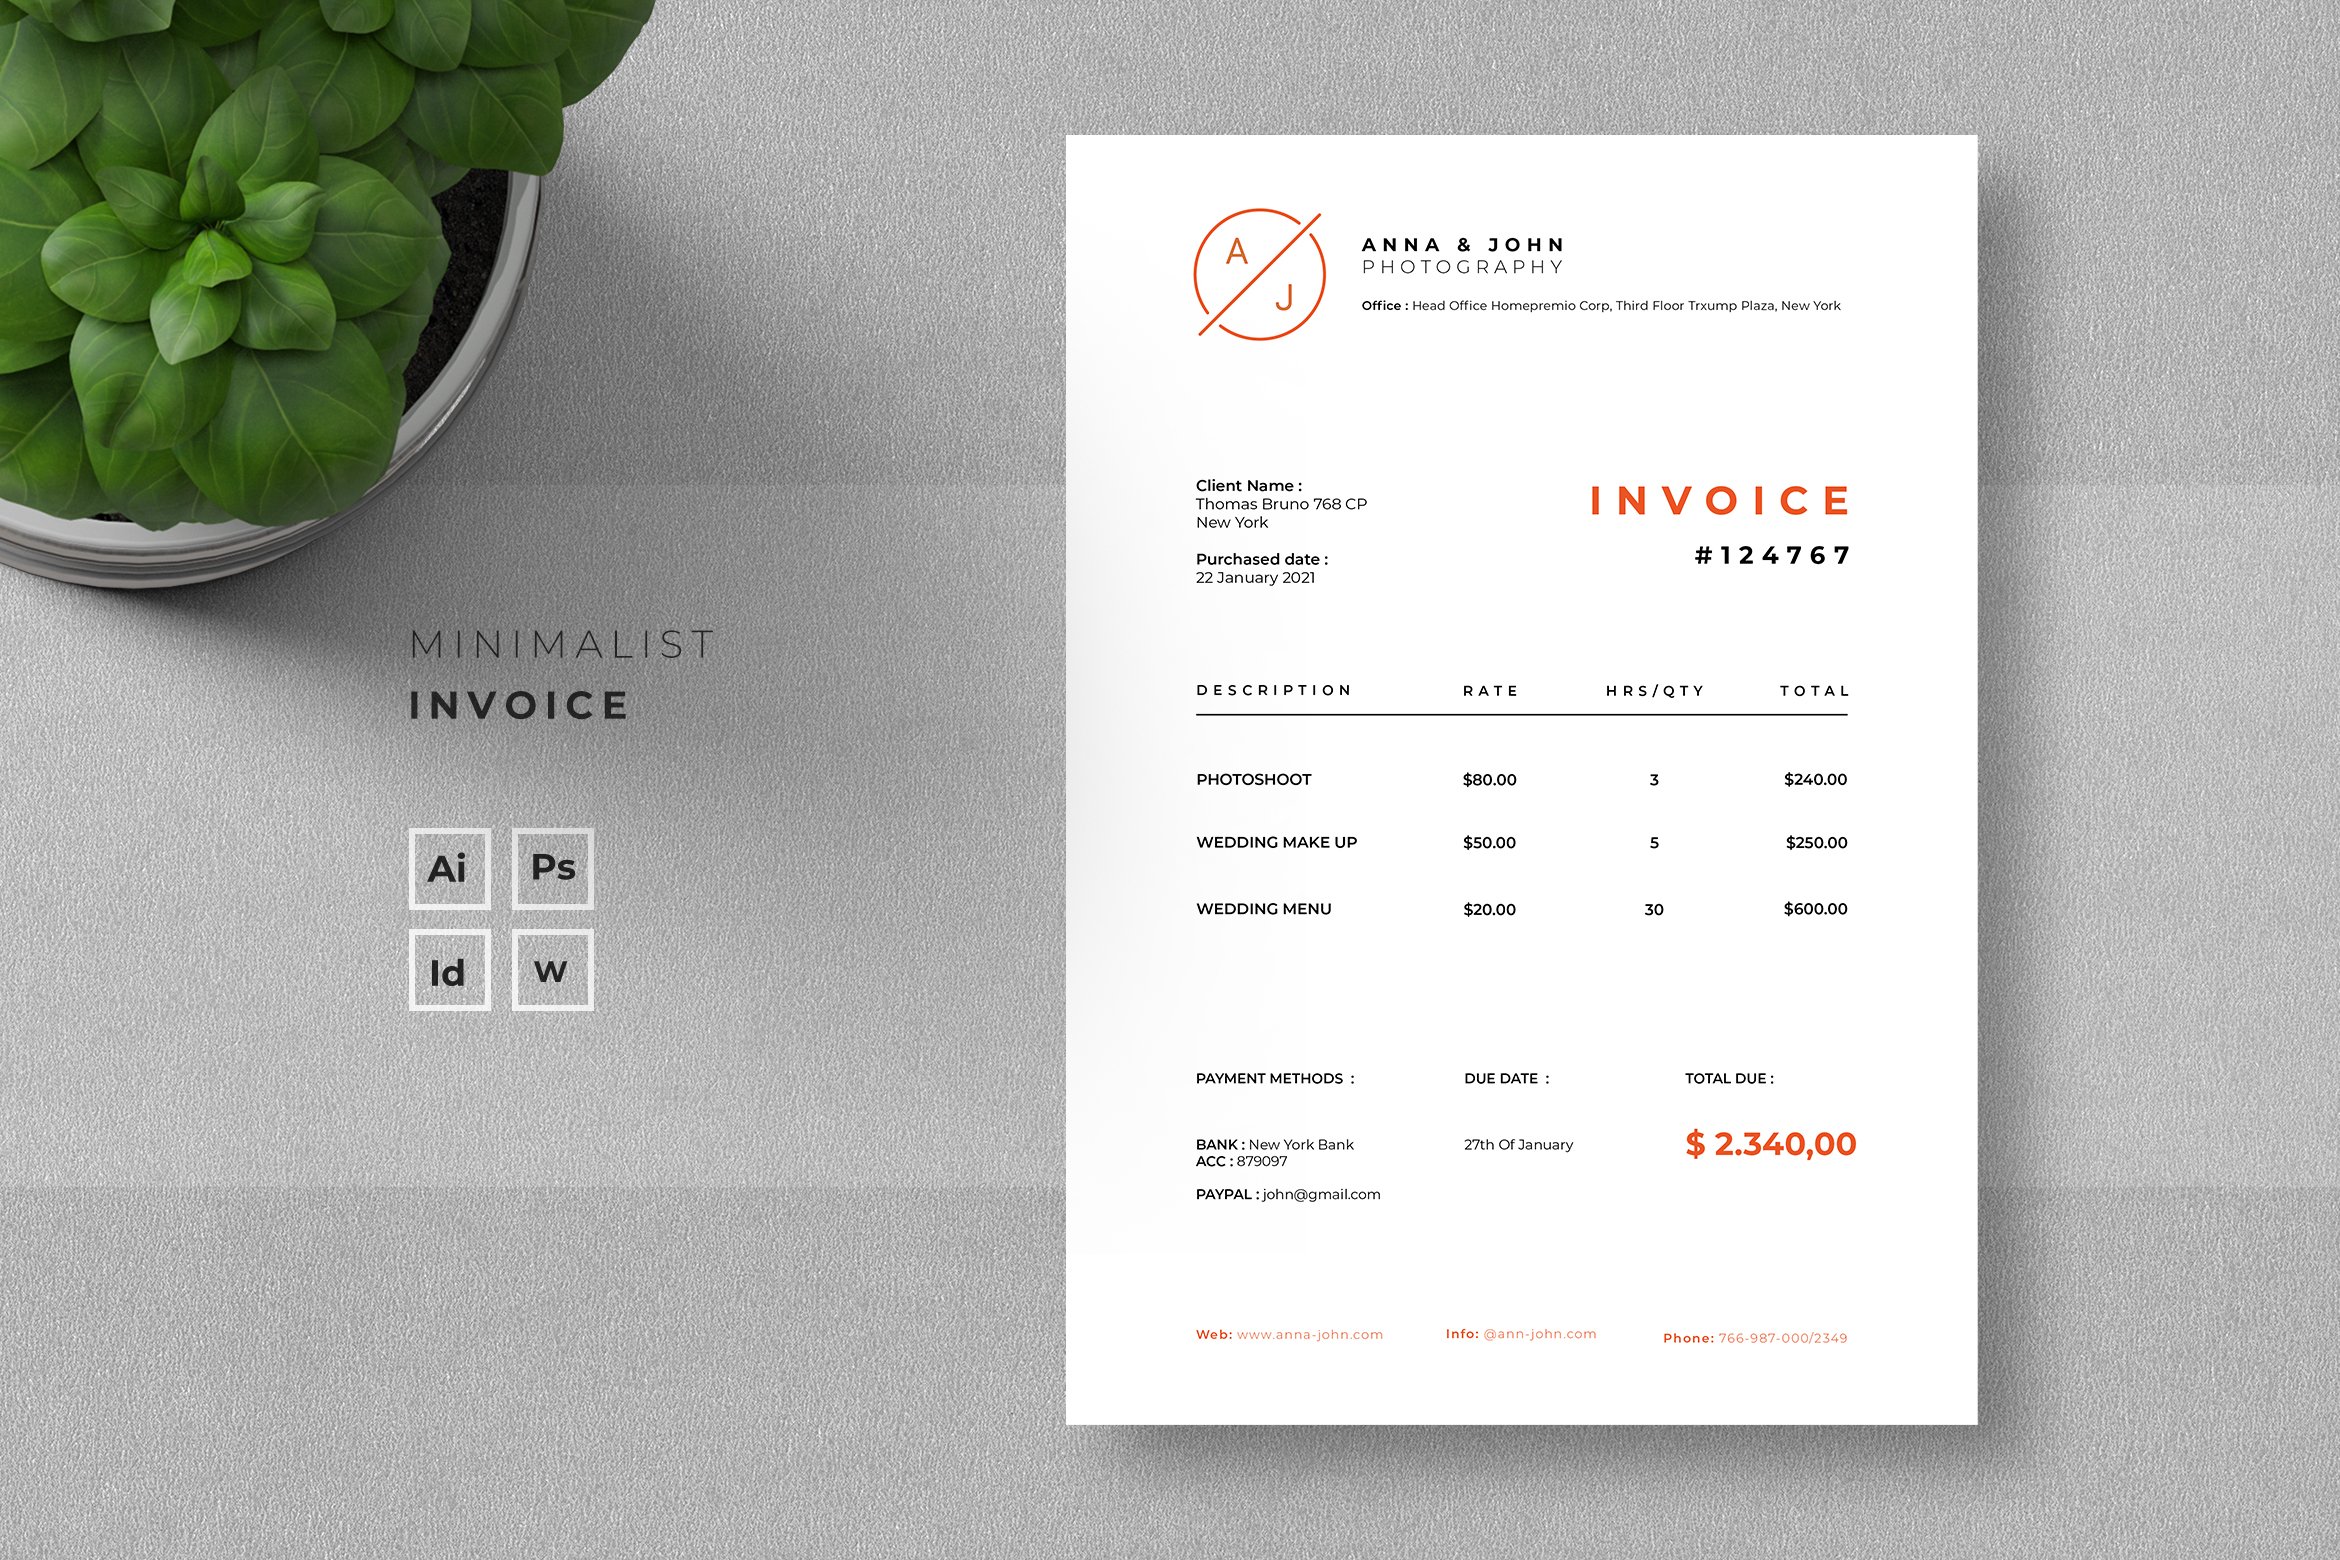 Minimalist Invoice cover image.